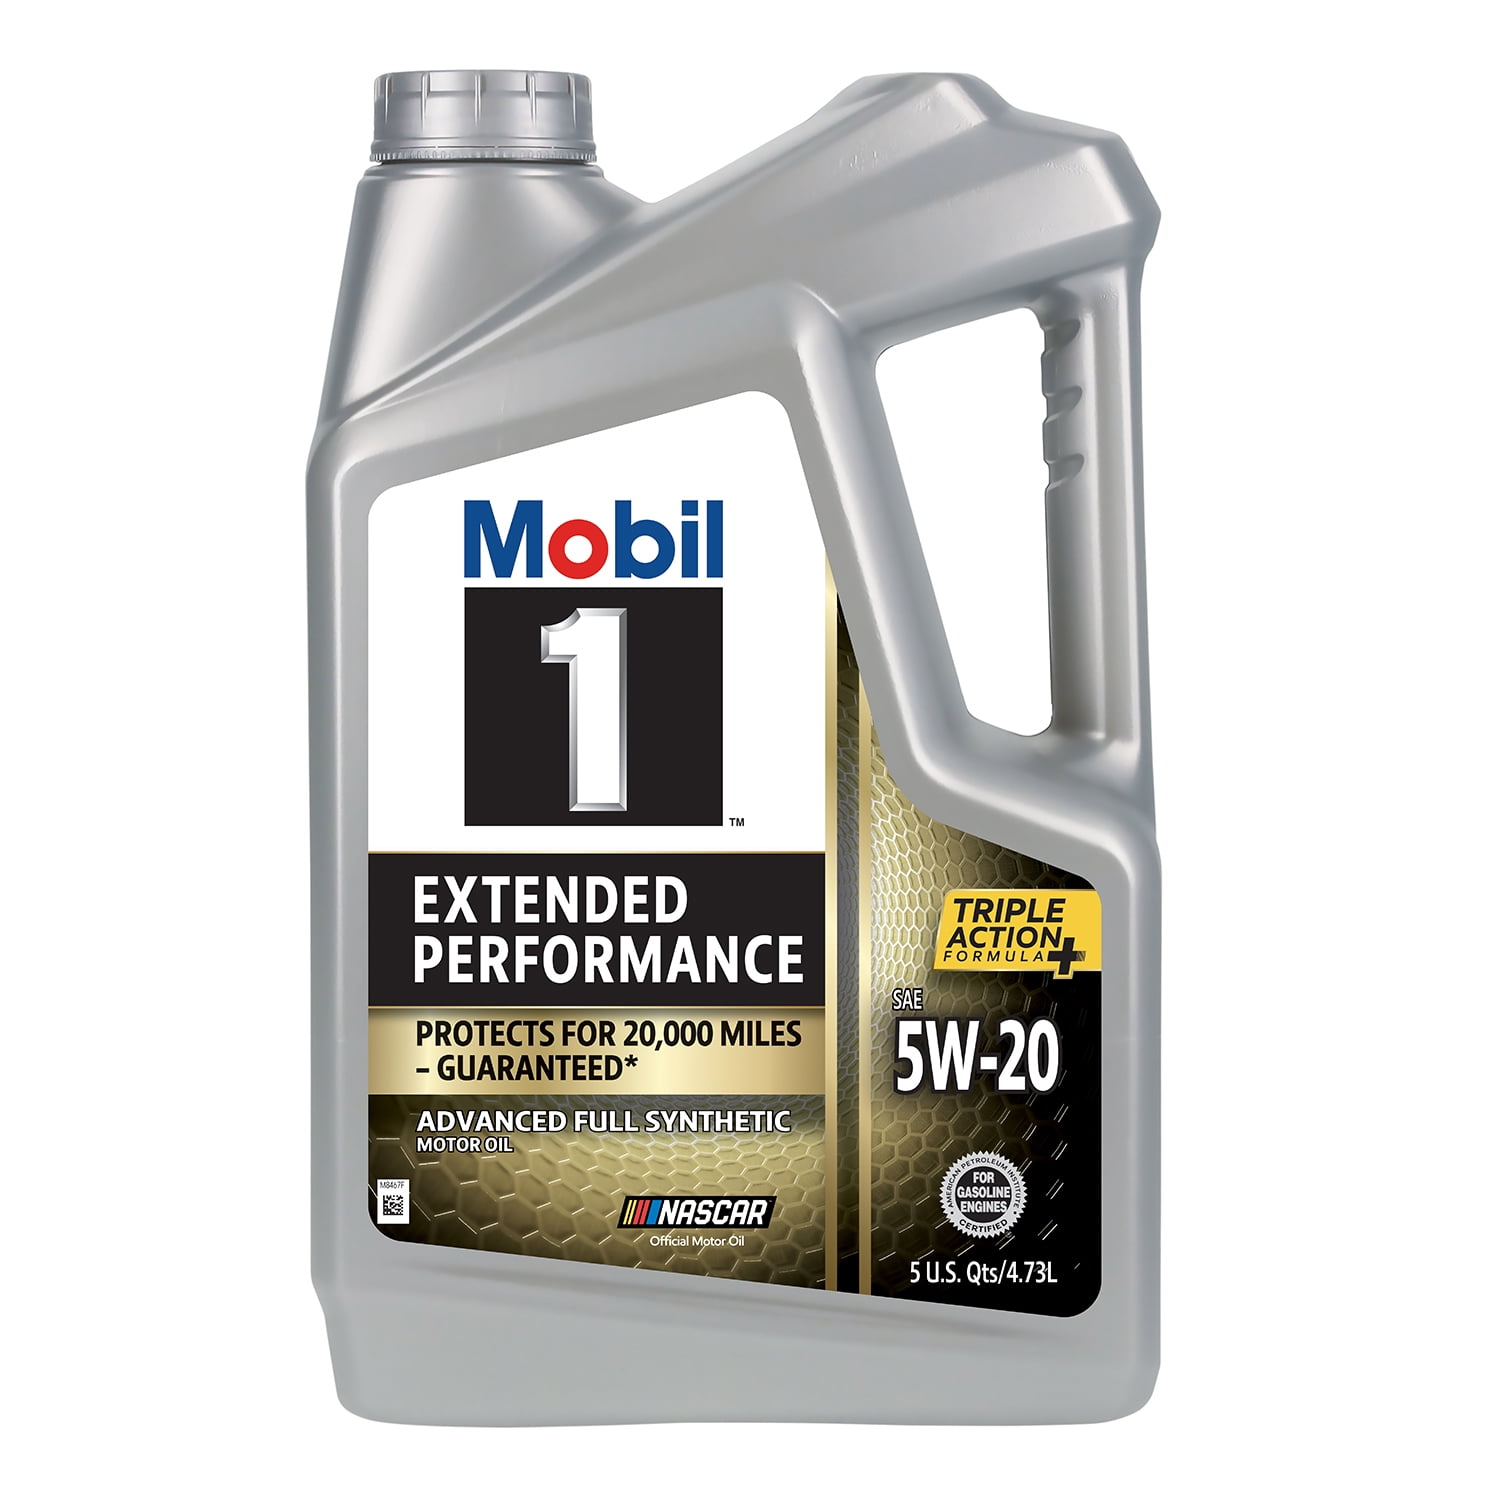 Mobil 1 Extended Performance Full Synthetic Motor Oil 5W-20, 5 qt (3 Pack) - 1